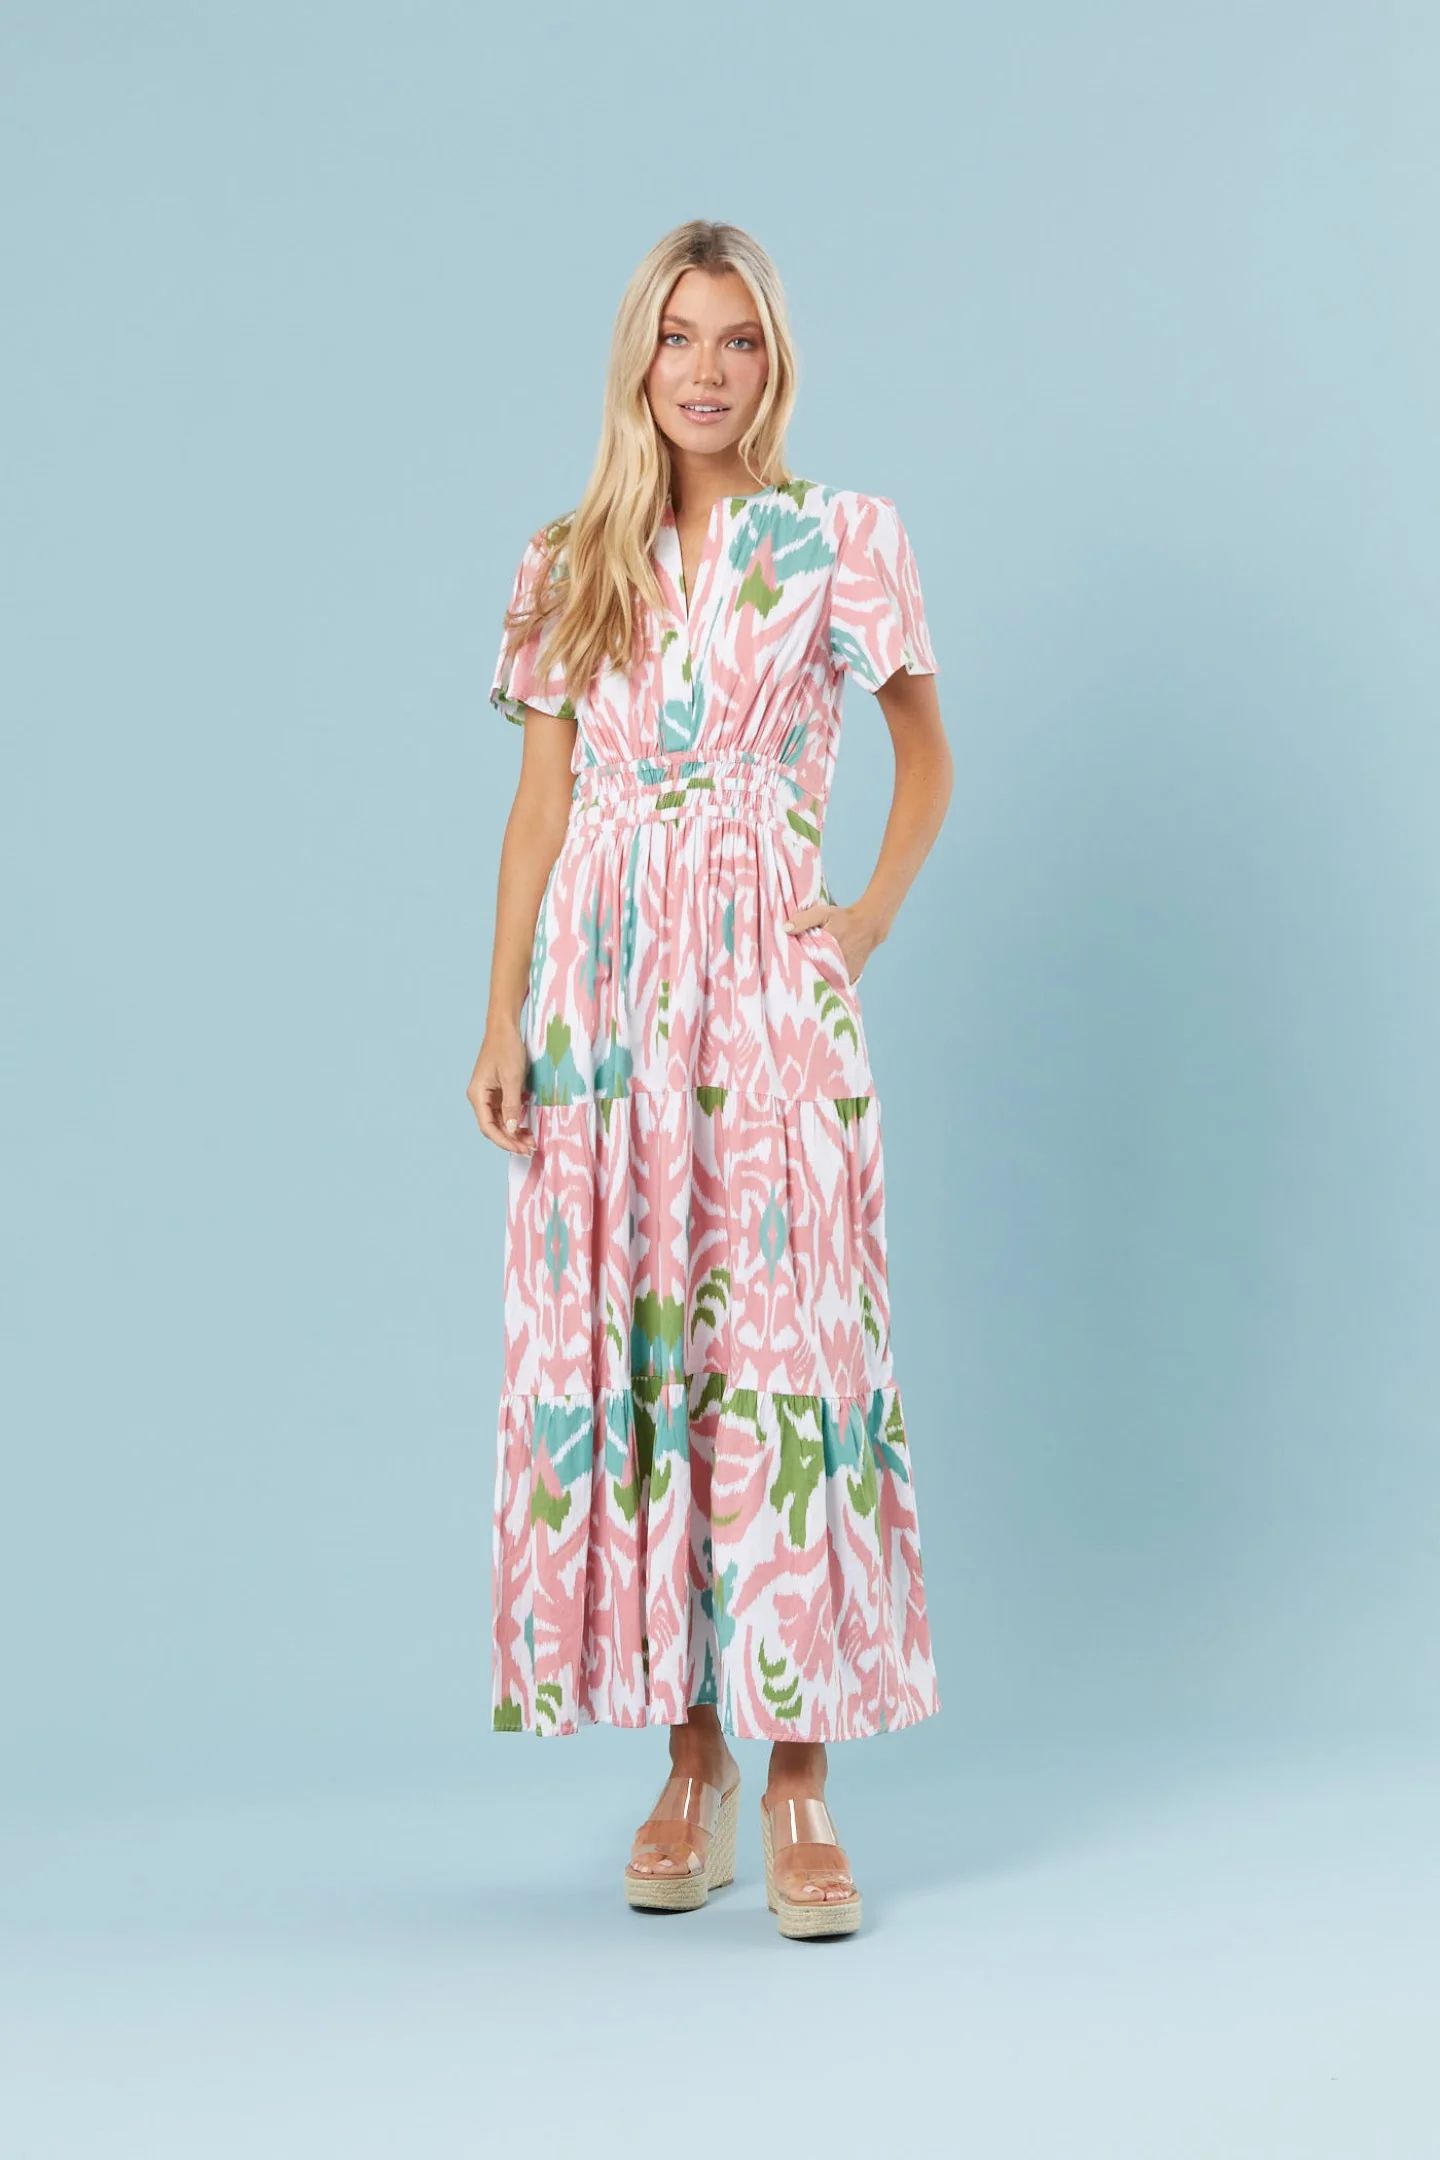 Sheridan French I Spring 2023 I Eloise Dress in Tulip Ikat Pink + Green + Tea | Sheridan French